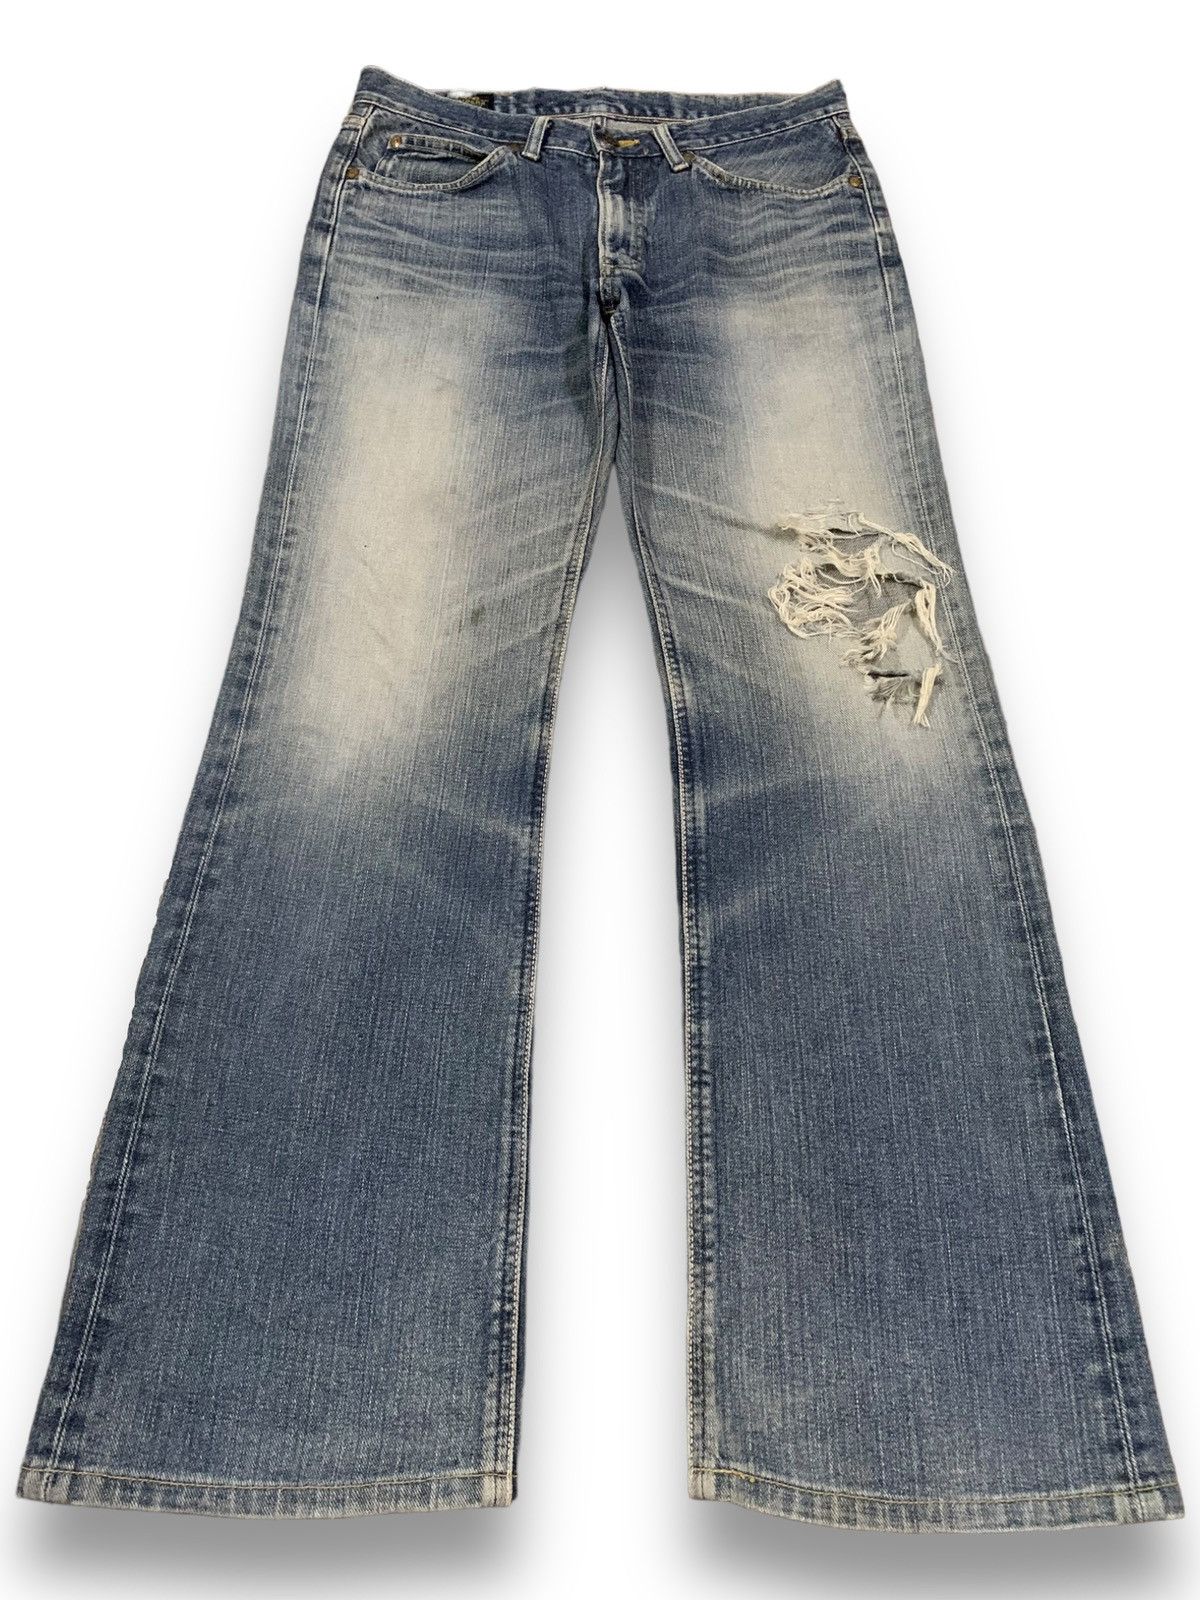 Lee Vintage Lee Cowboy Sanforized Distressed Flared Jeans Size US 31 - 1 Preview